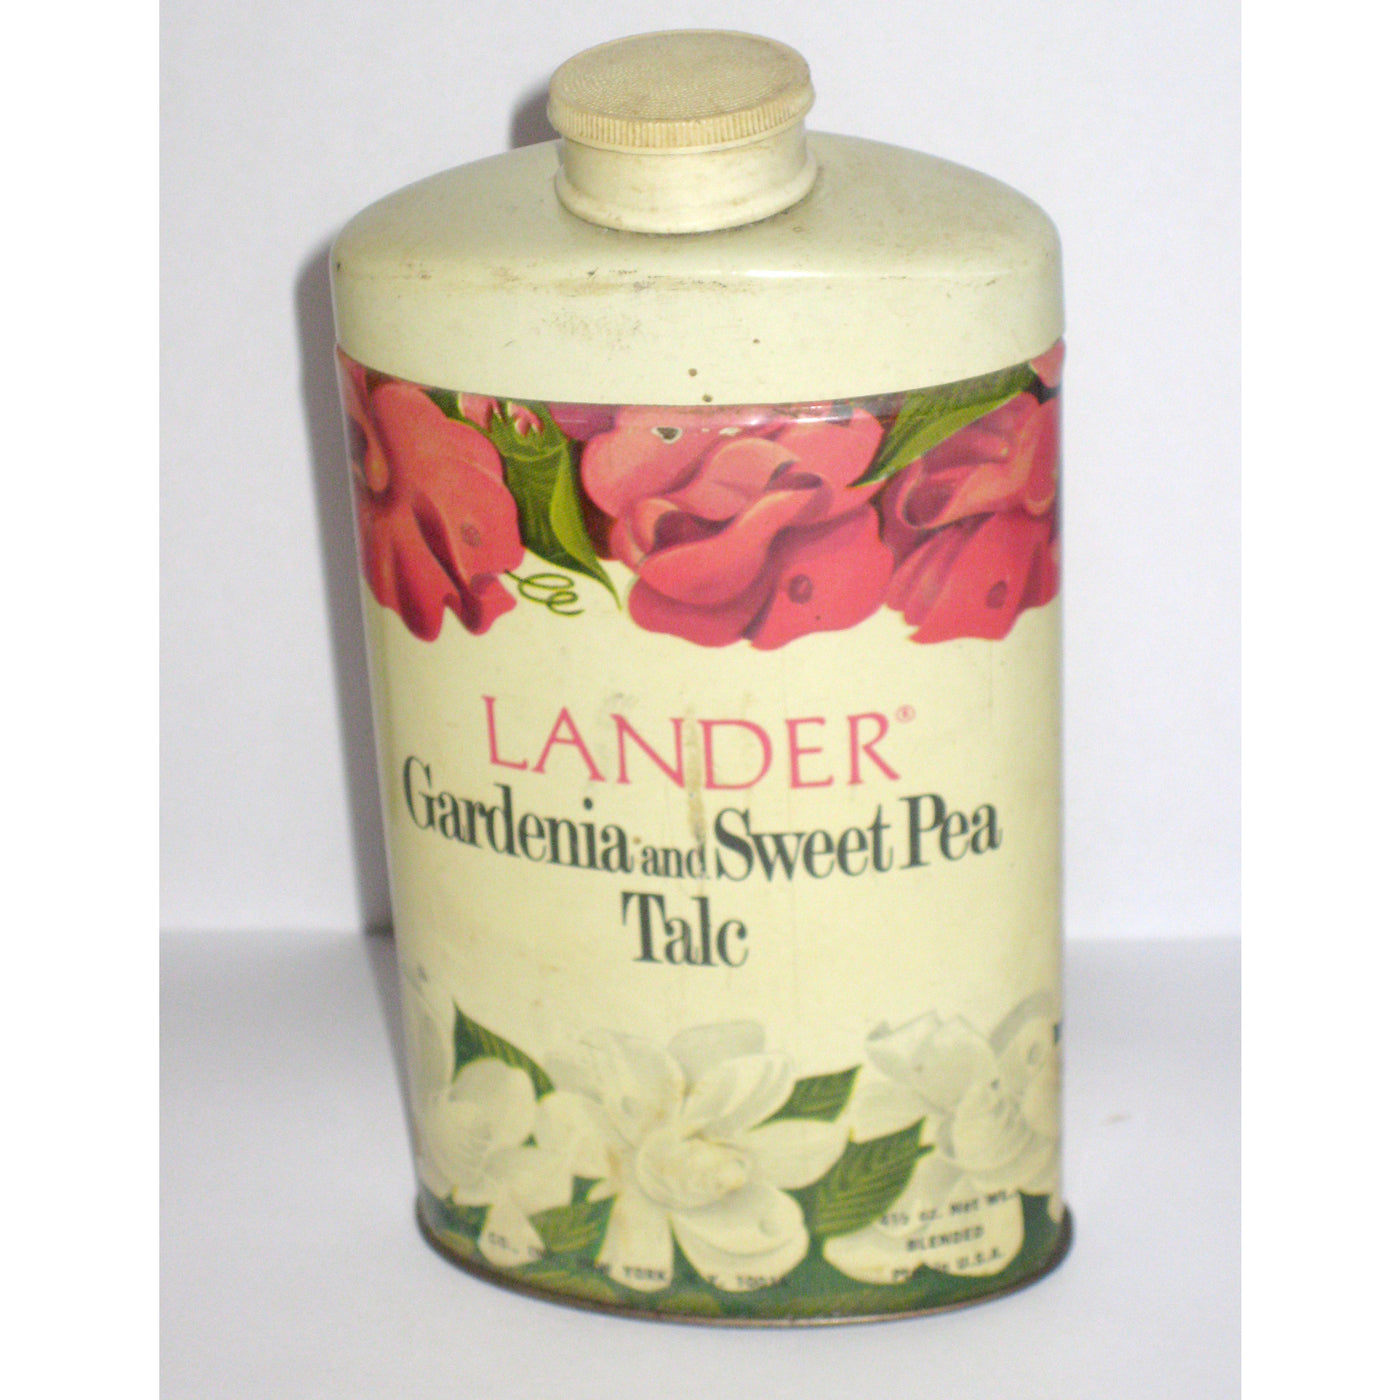 Vintage Gardenia and Sweet Pea Talc By Lander 